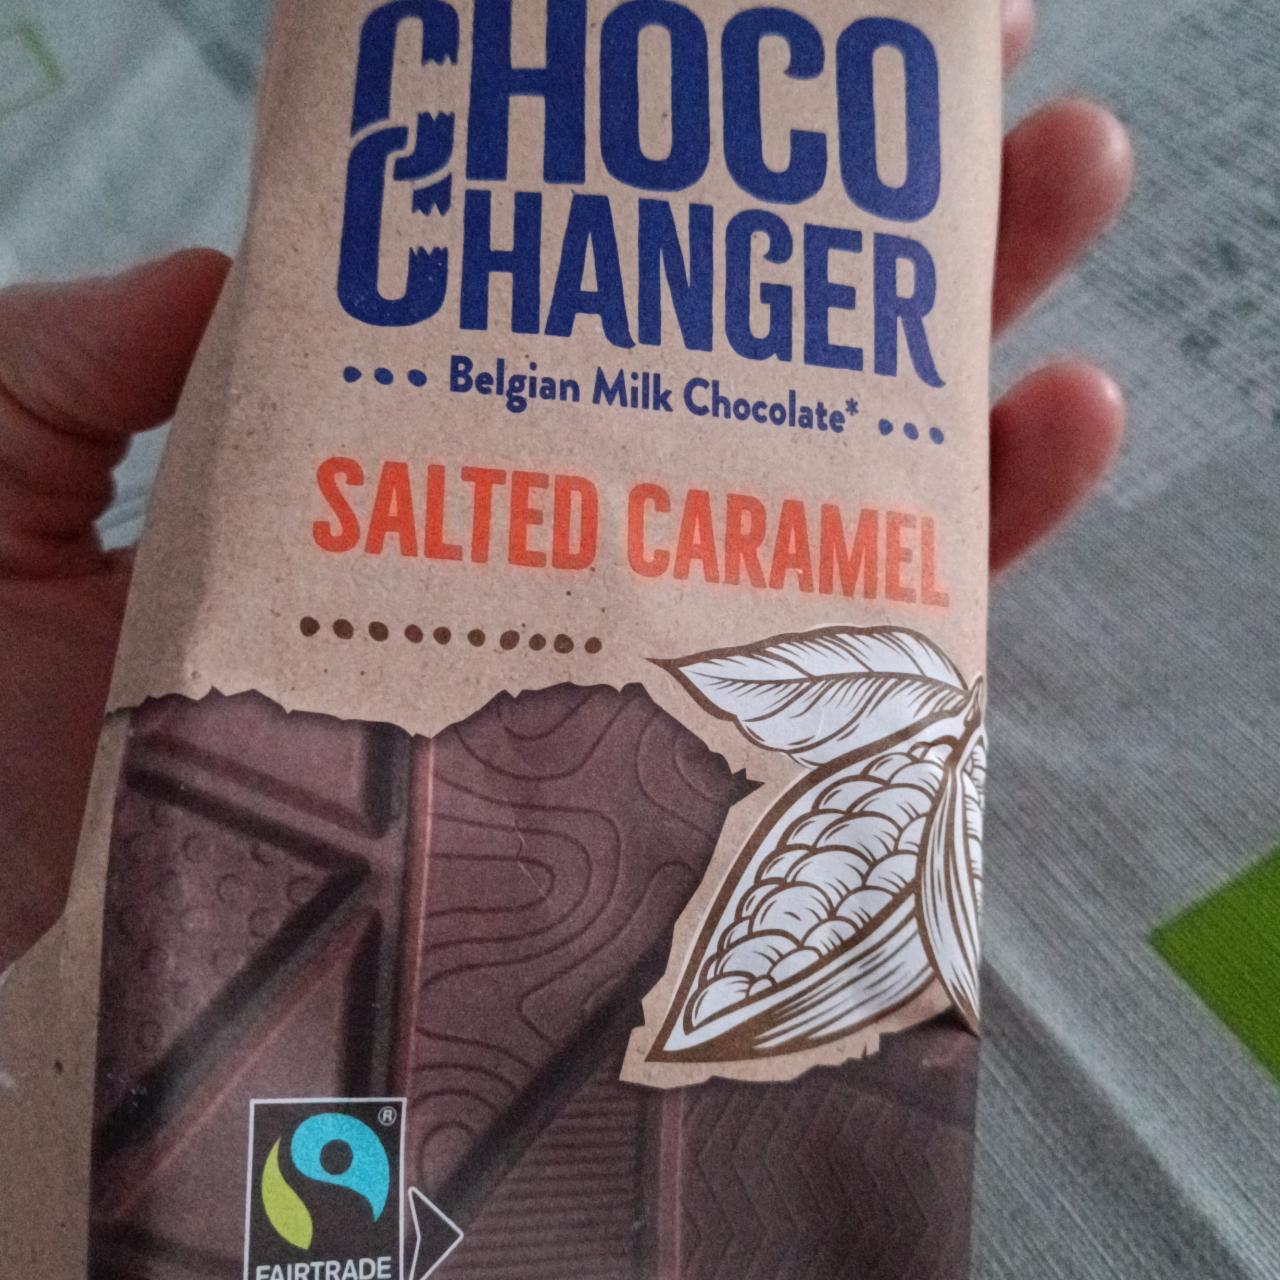 Képek - Belgian milk chocolate salted caramel Choco changer